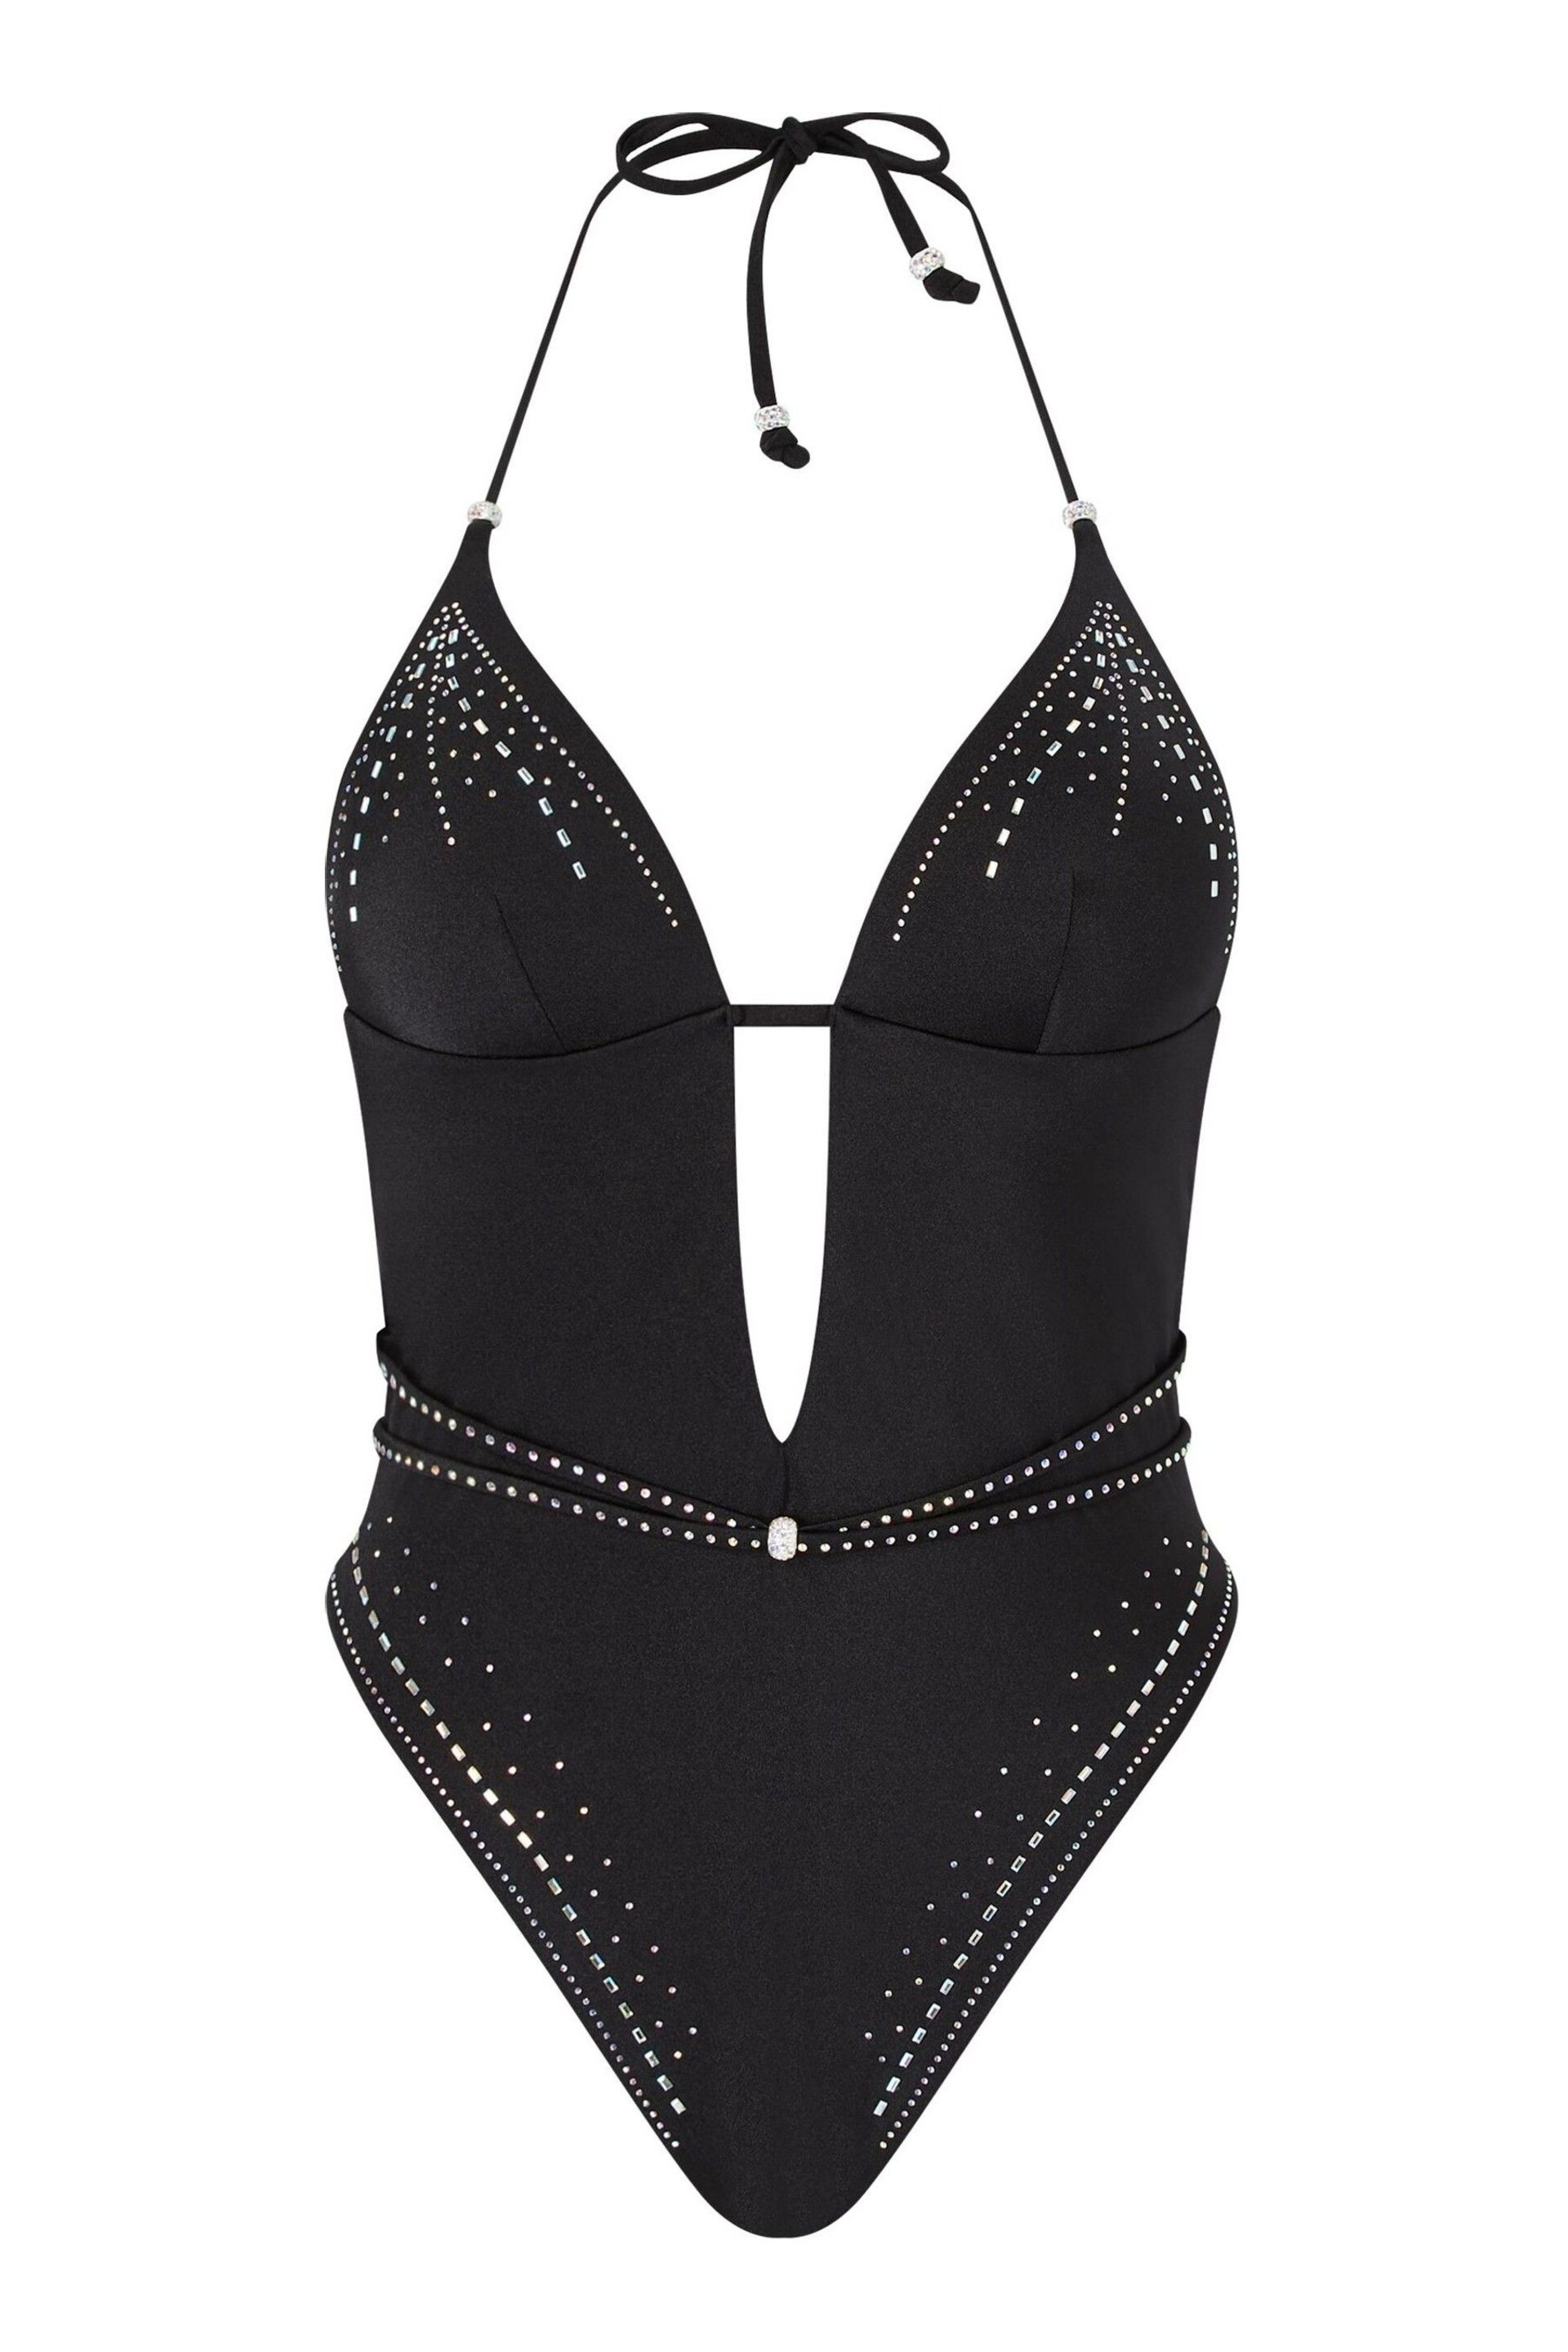 Ann Summers Black Summer Siren Soft Swimsuit - Image 5 of 5